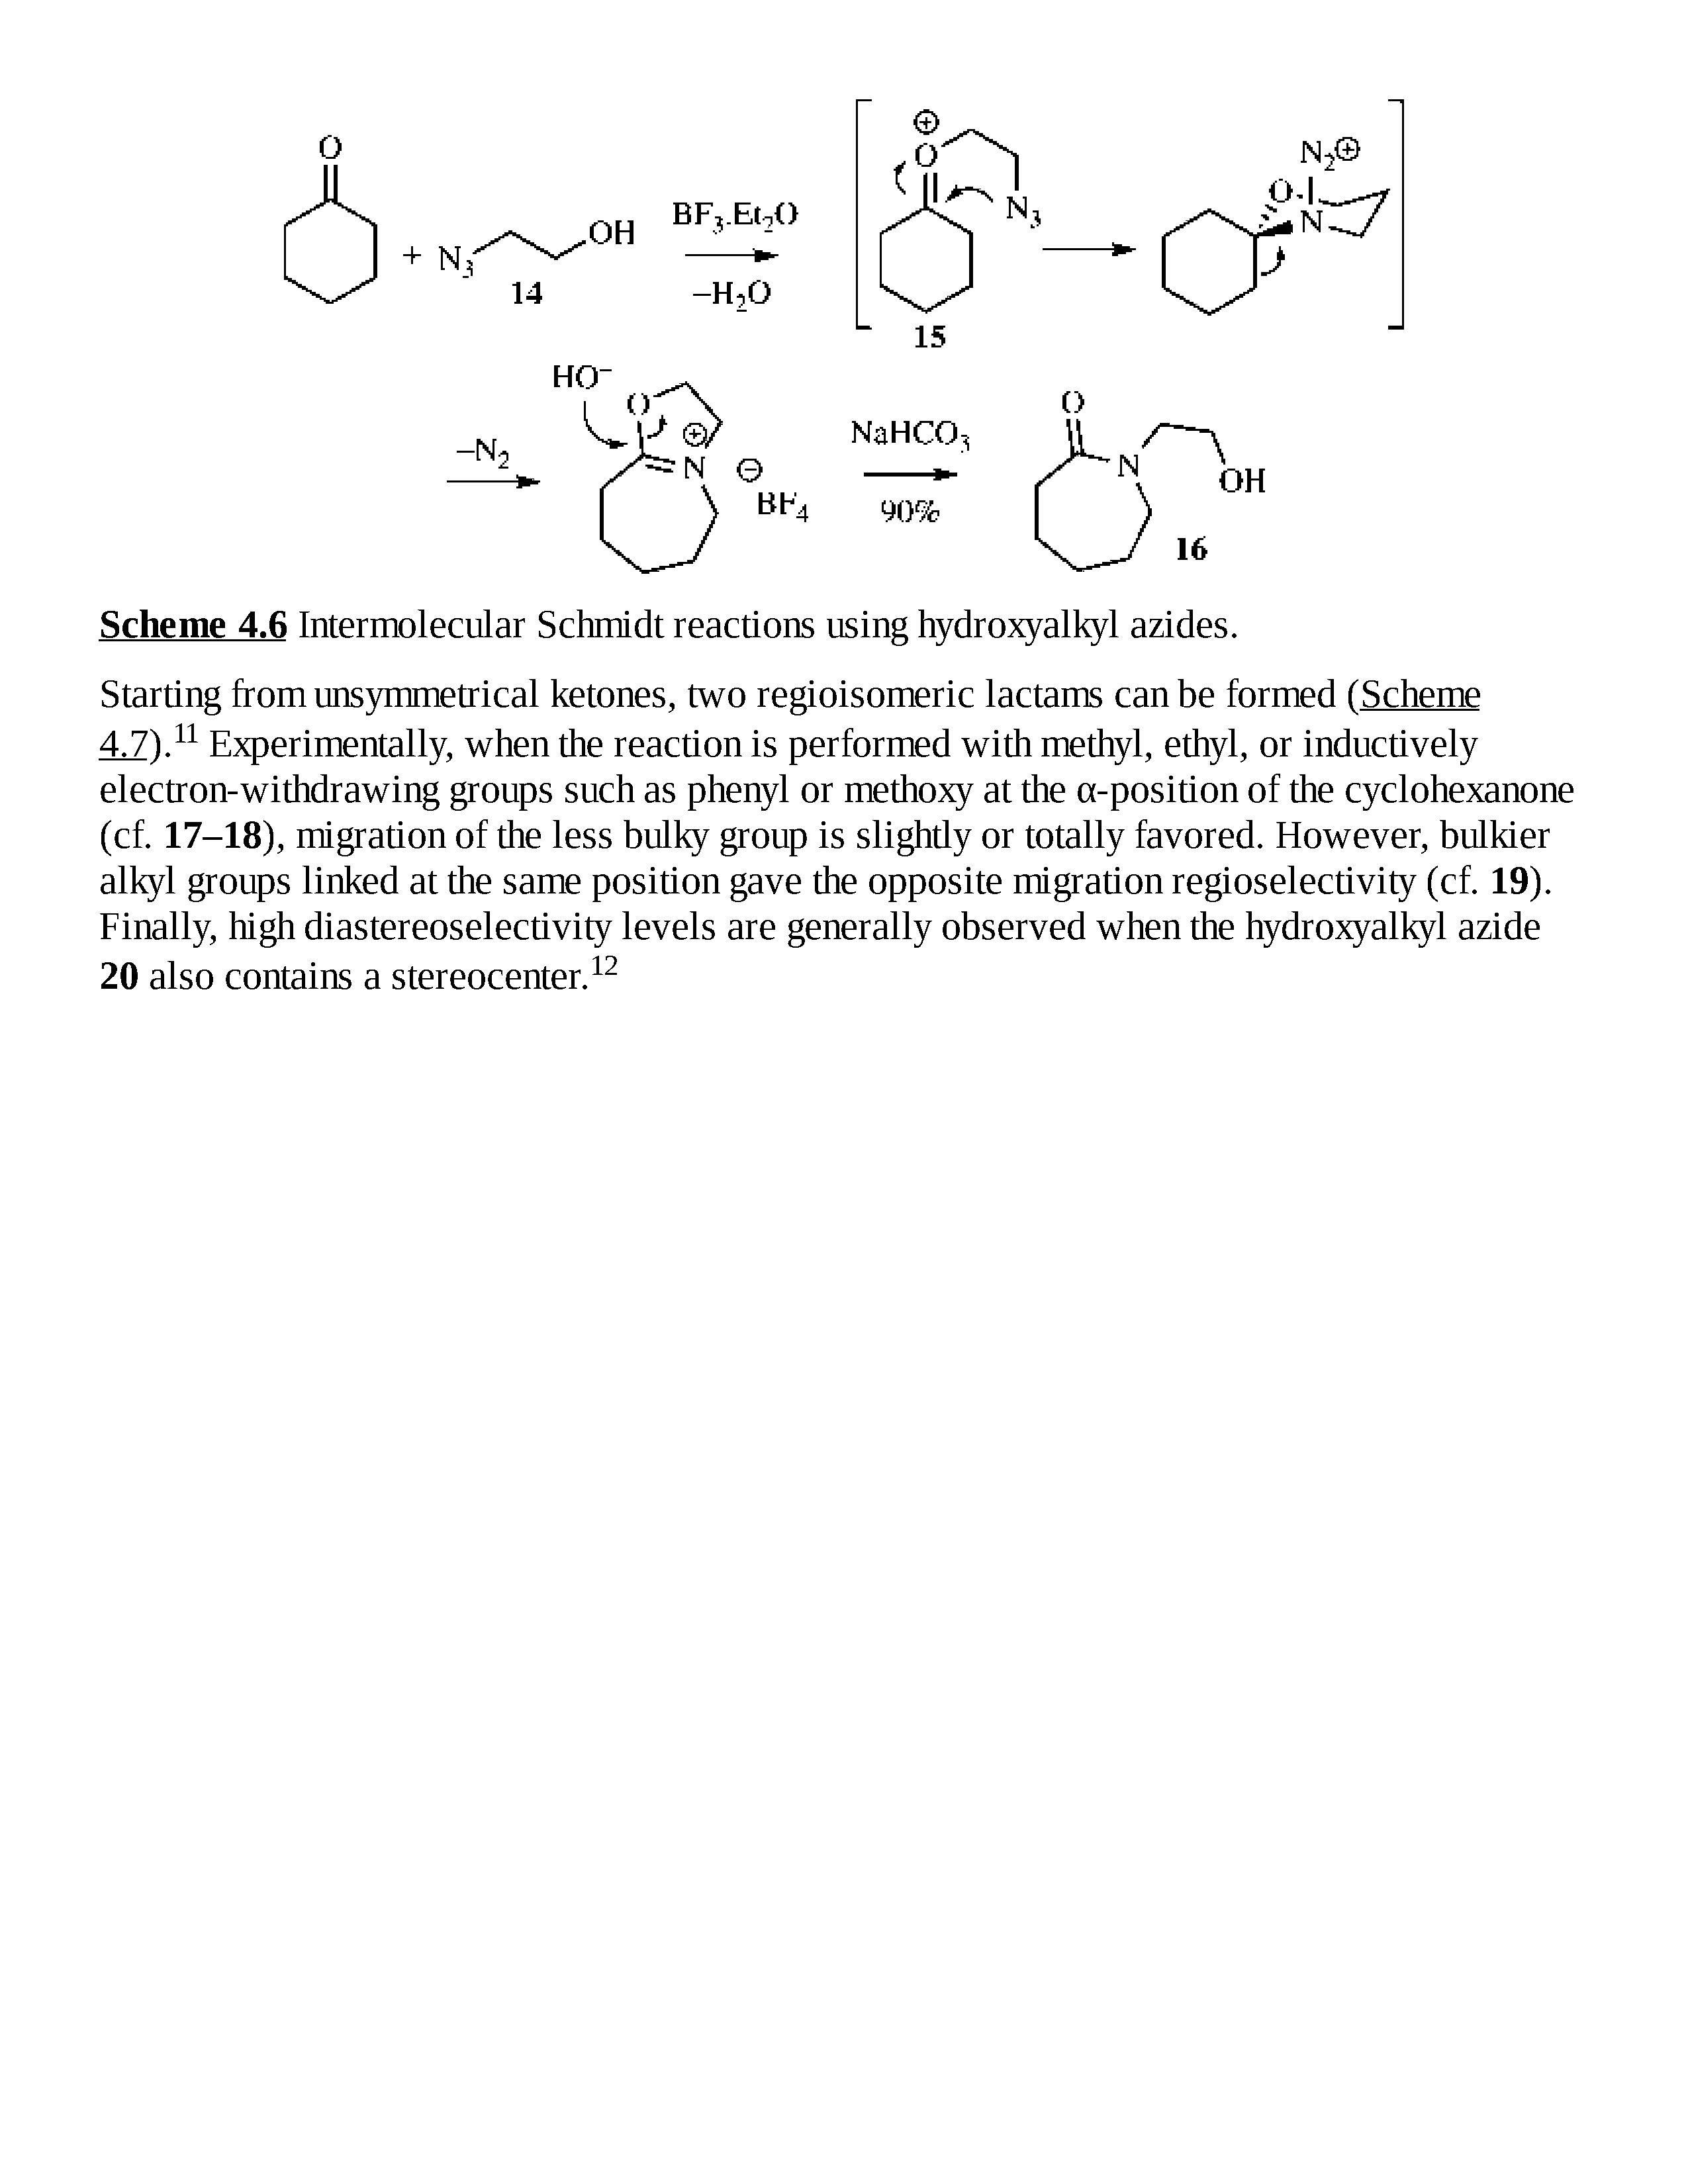 Scheme 4.6 Intermolecular Schmidt reactions using hydroxyalkyl azides.